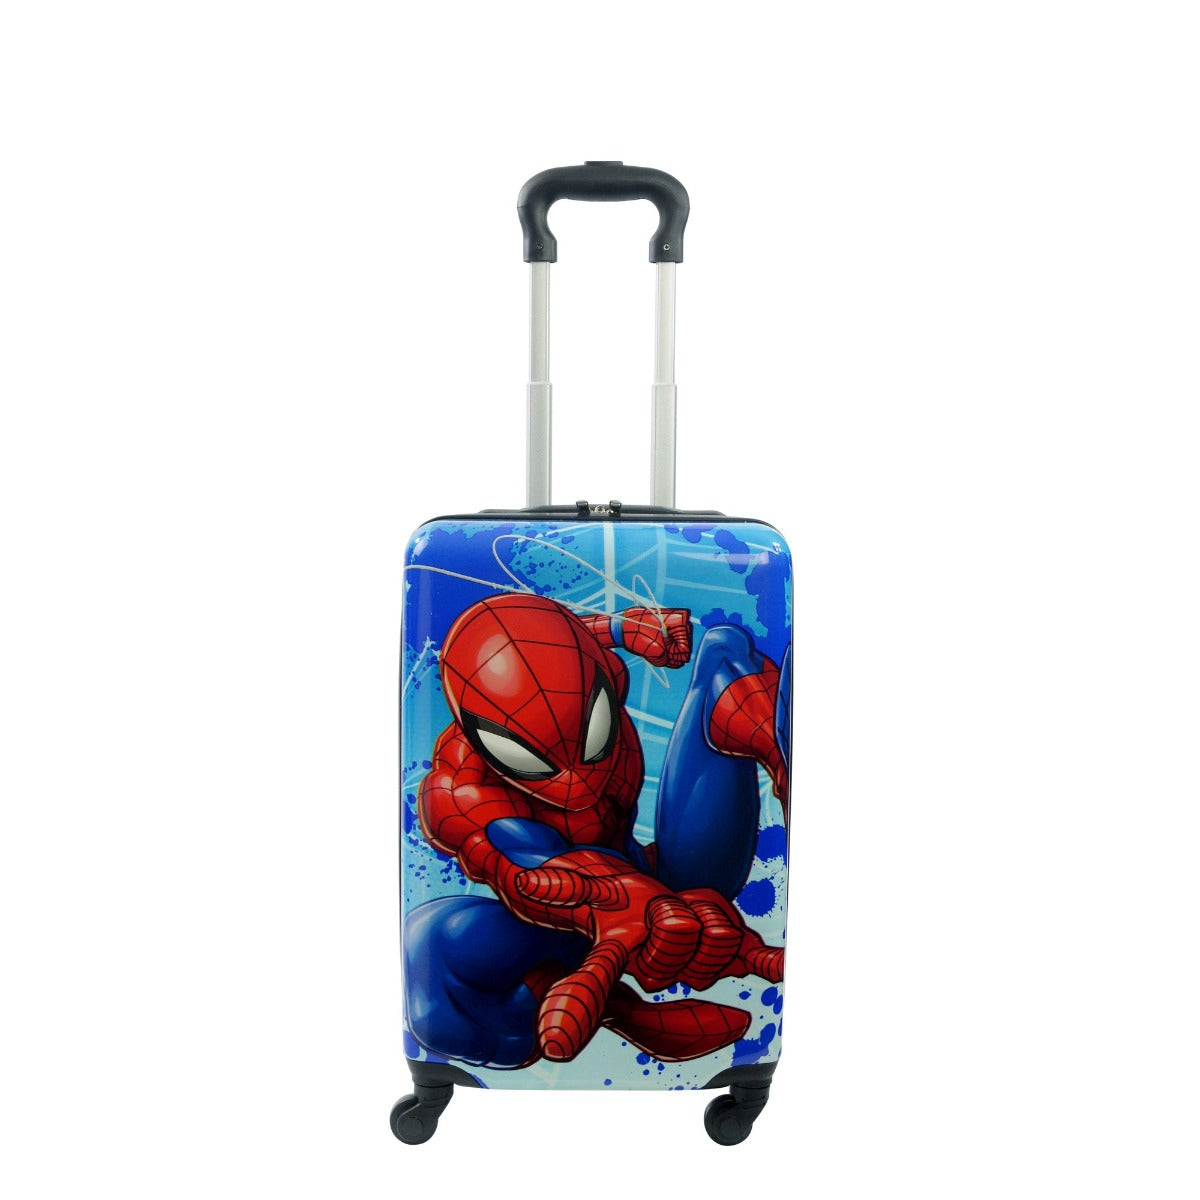 Ful Spiderman kids 21 inch hardside spinner suitcase carry on luggage - carry on luggage for kids